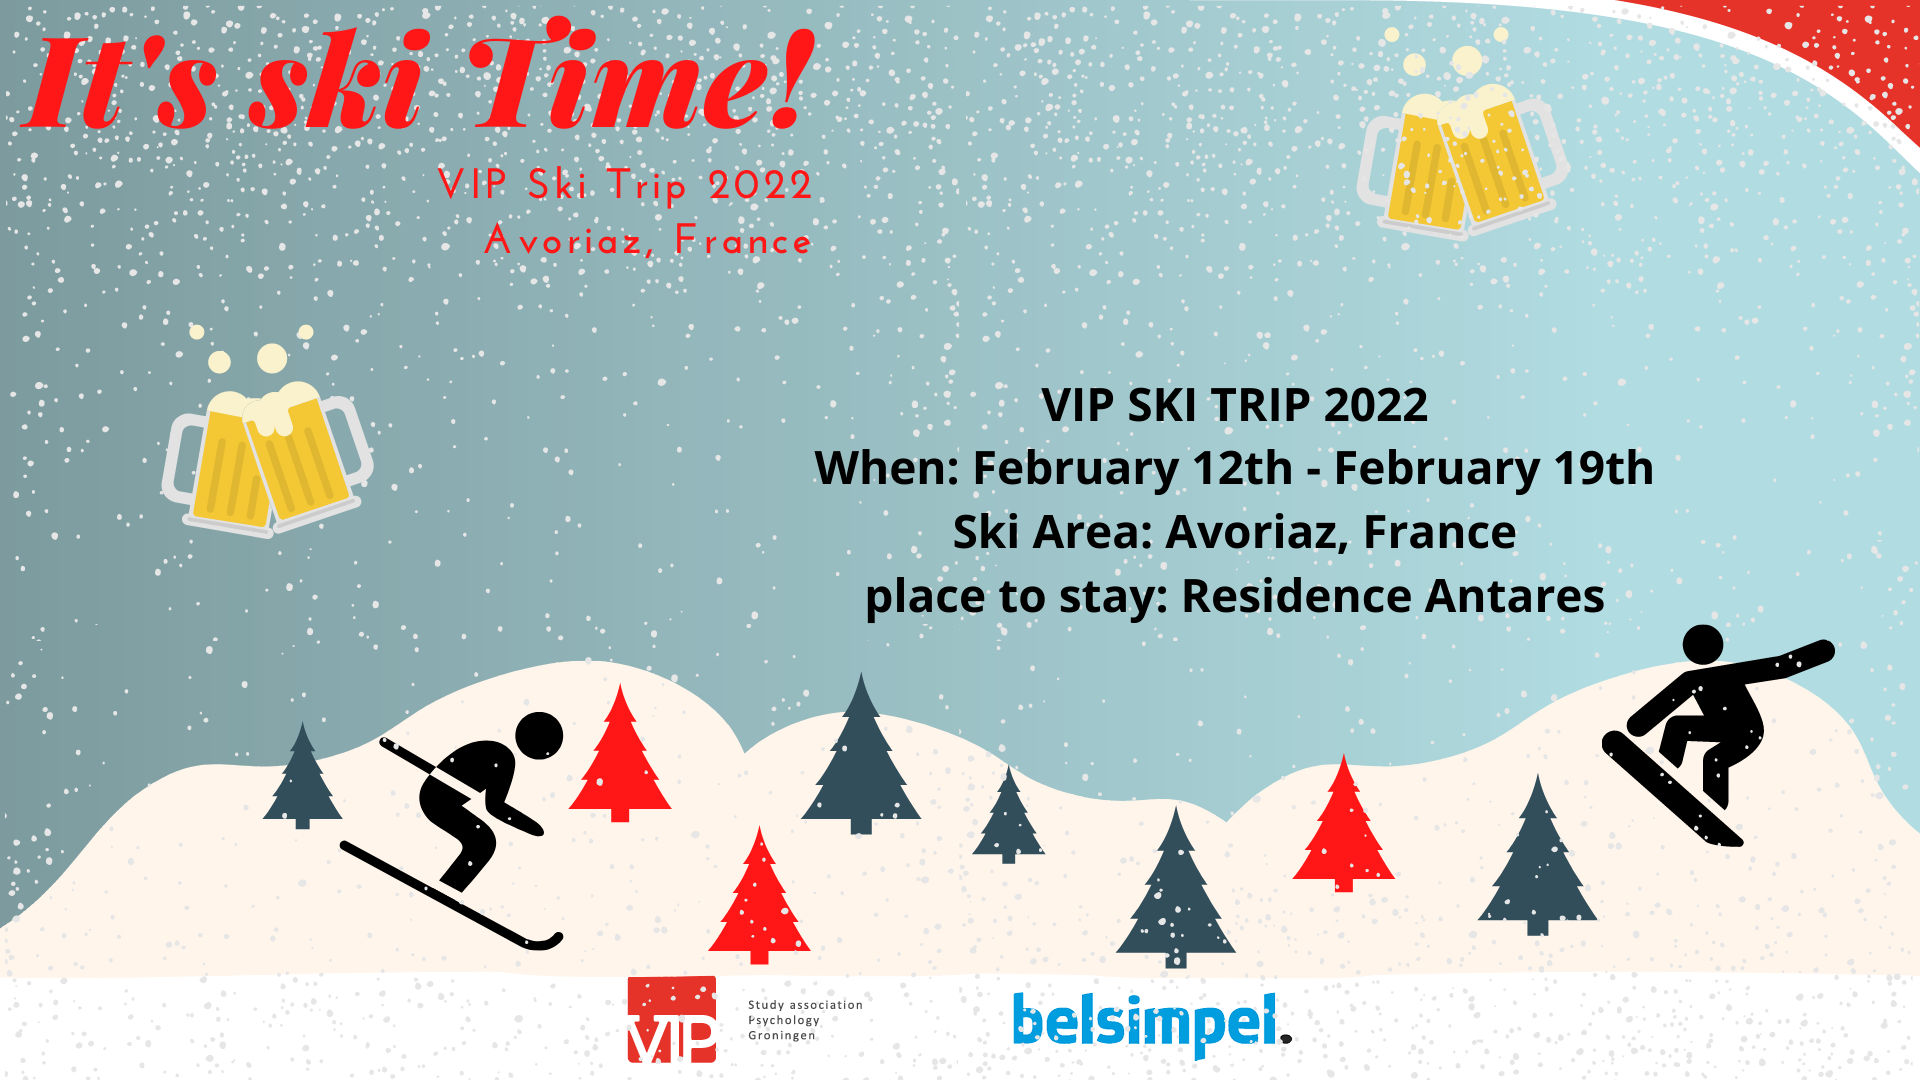 VIP: Wintersport